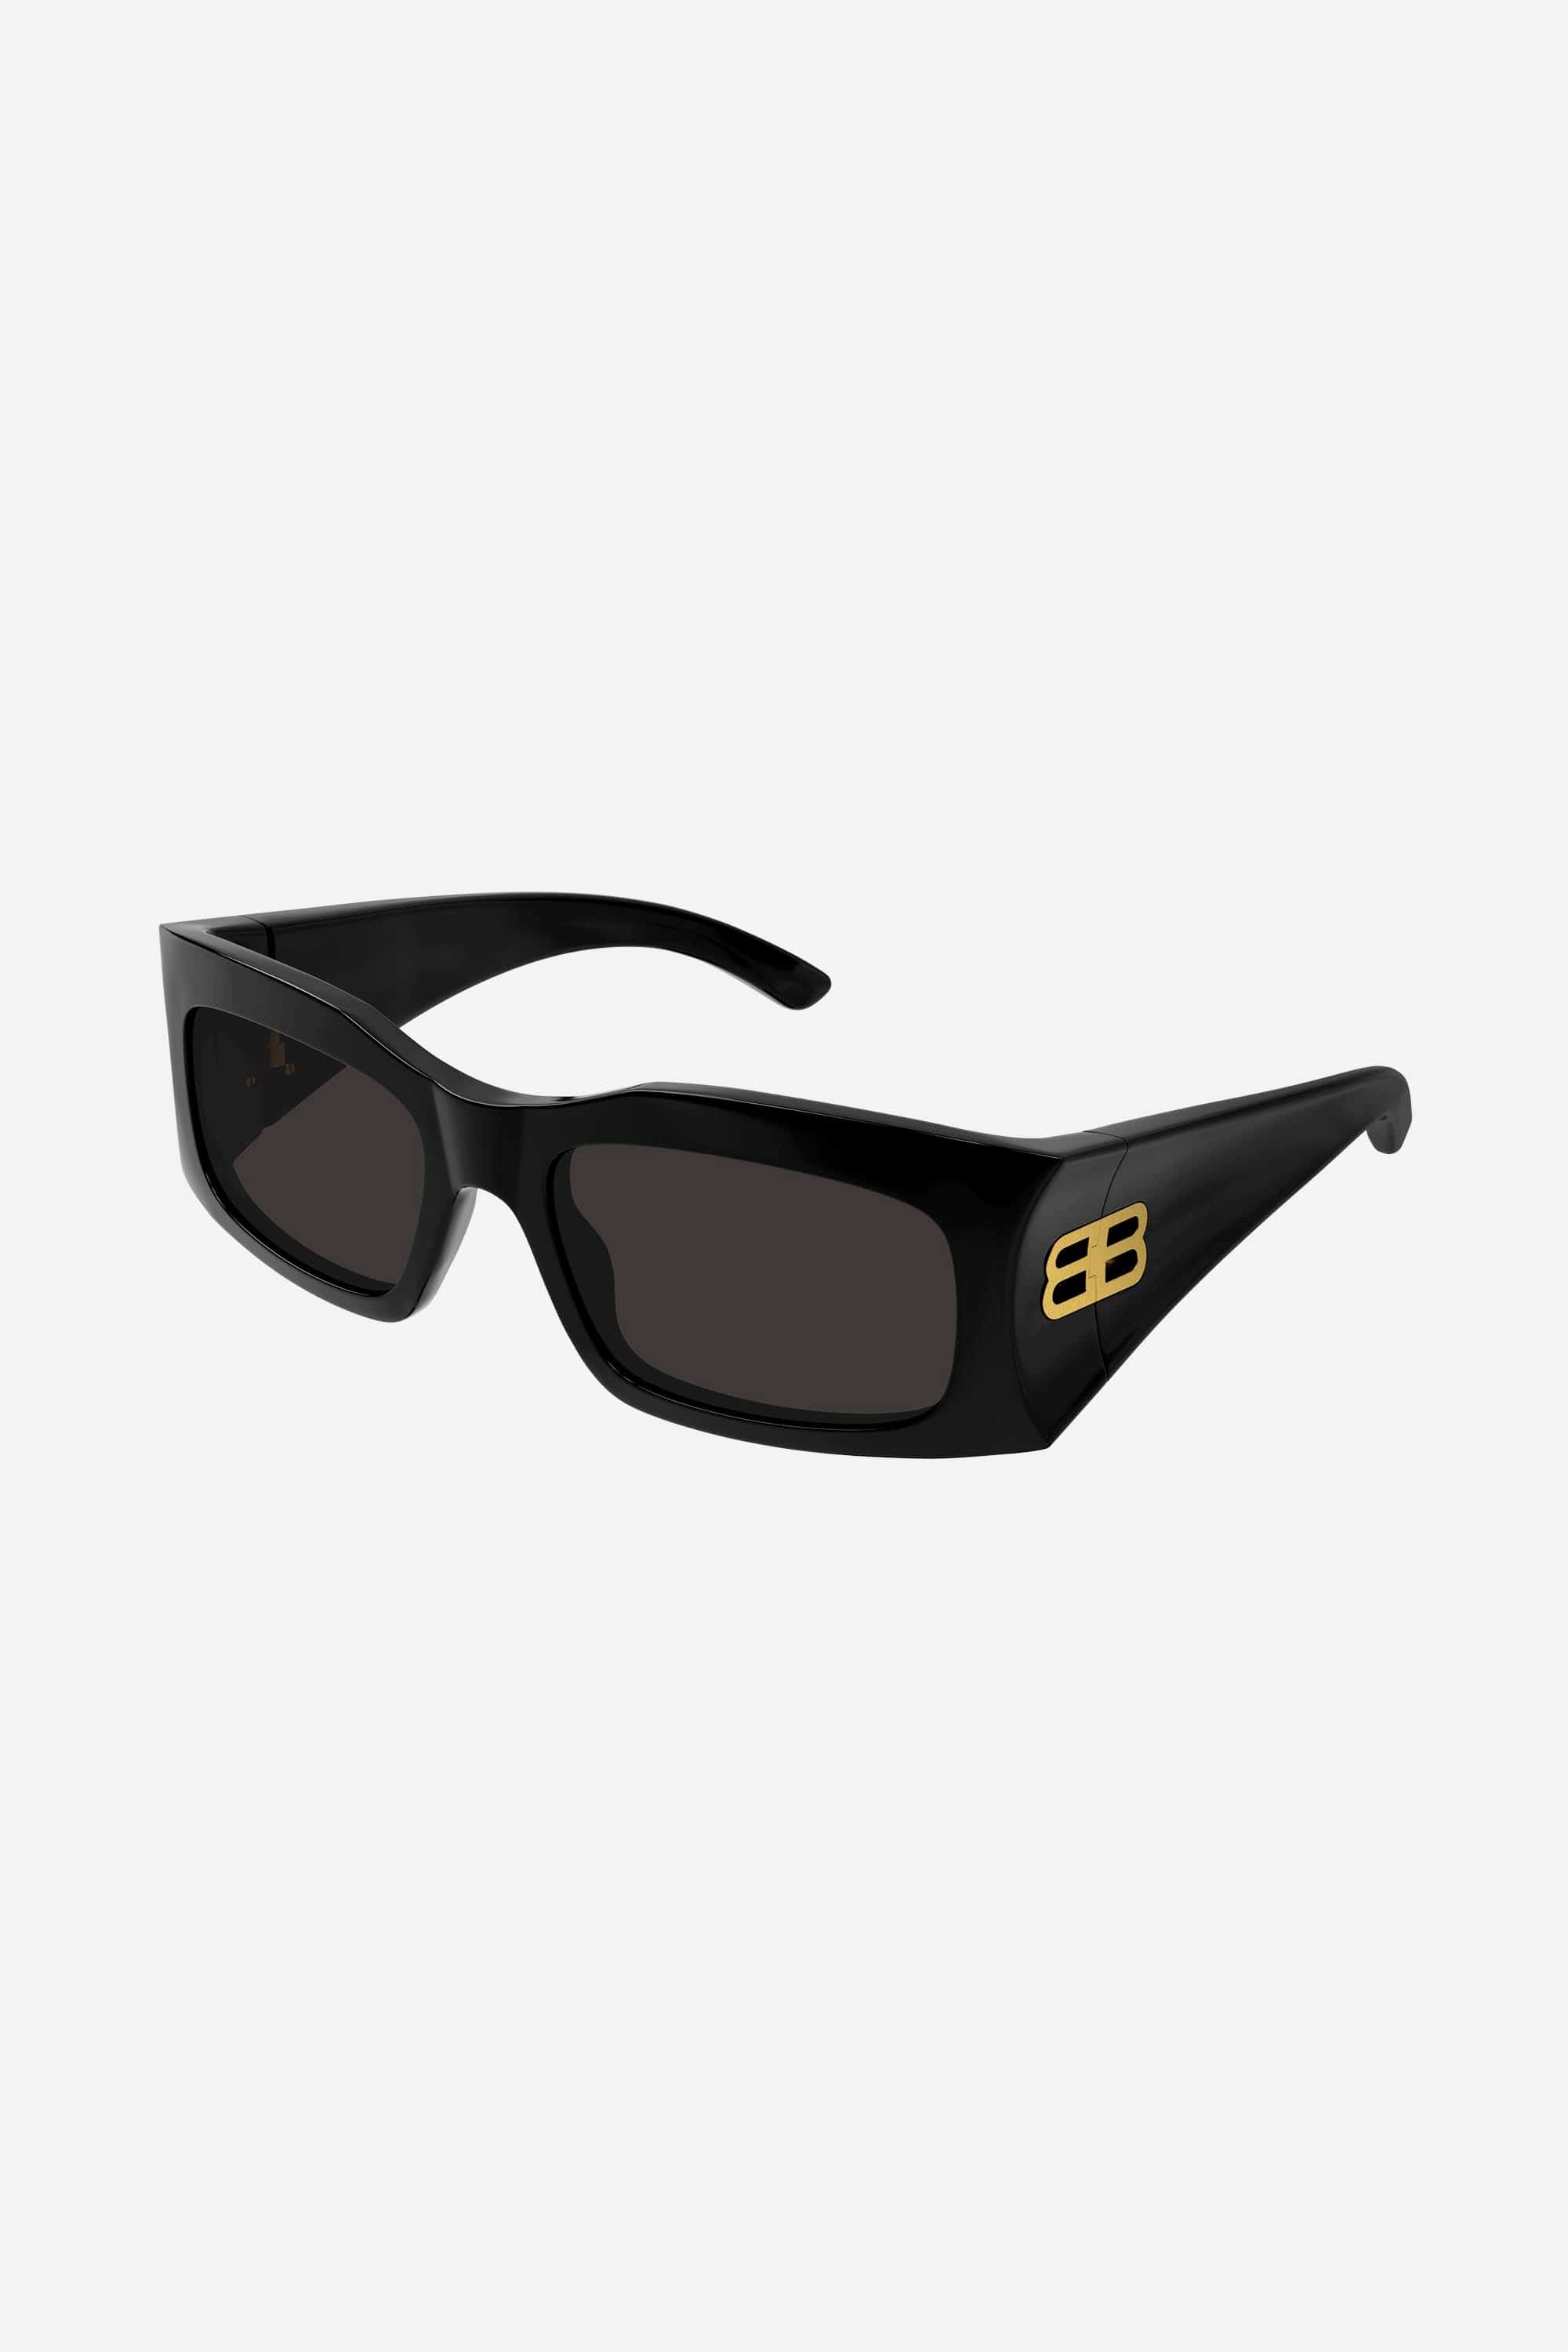 Balenciaga hourglass sunglasses in black - Eyewear Club